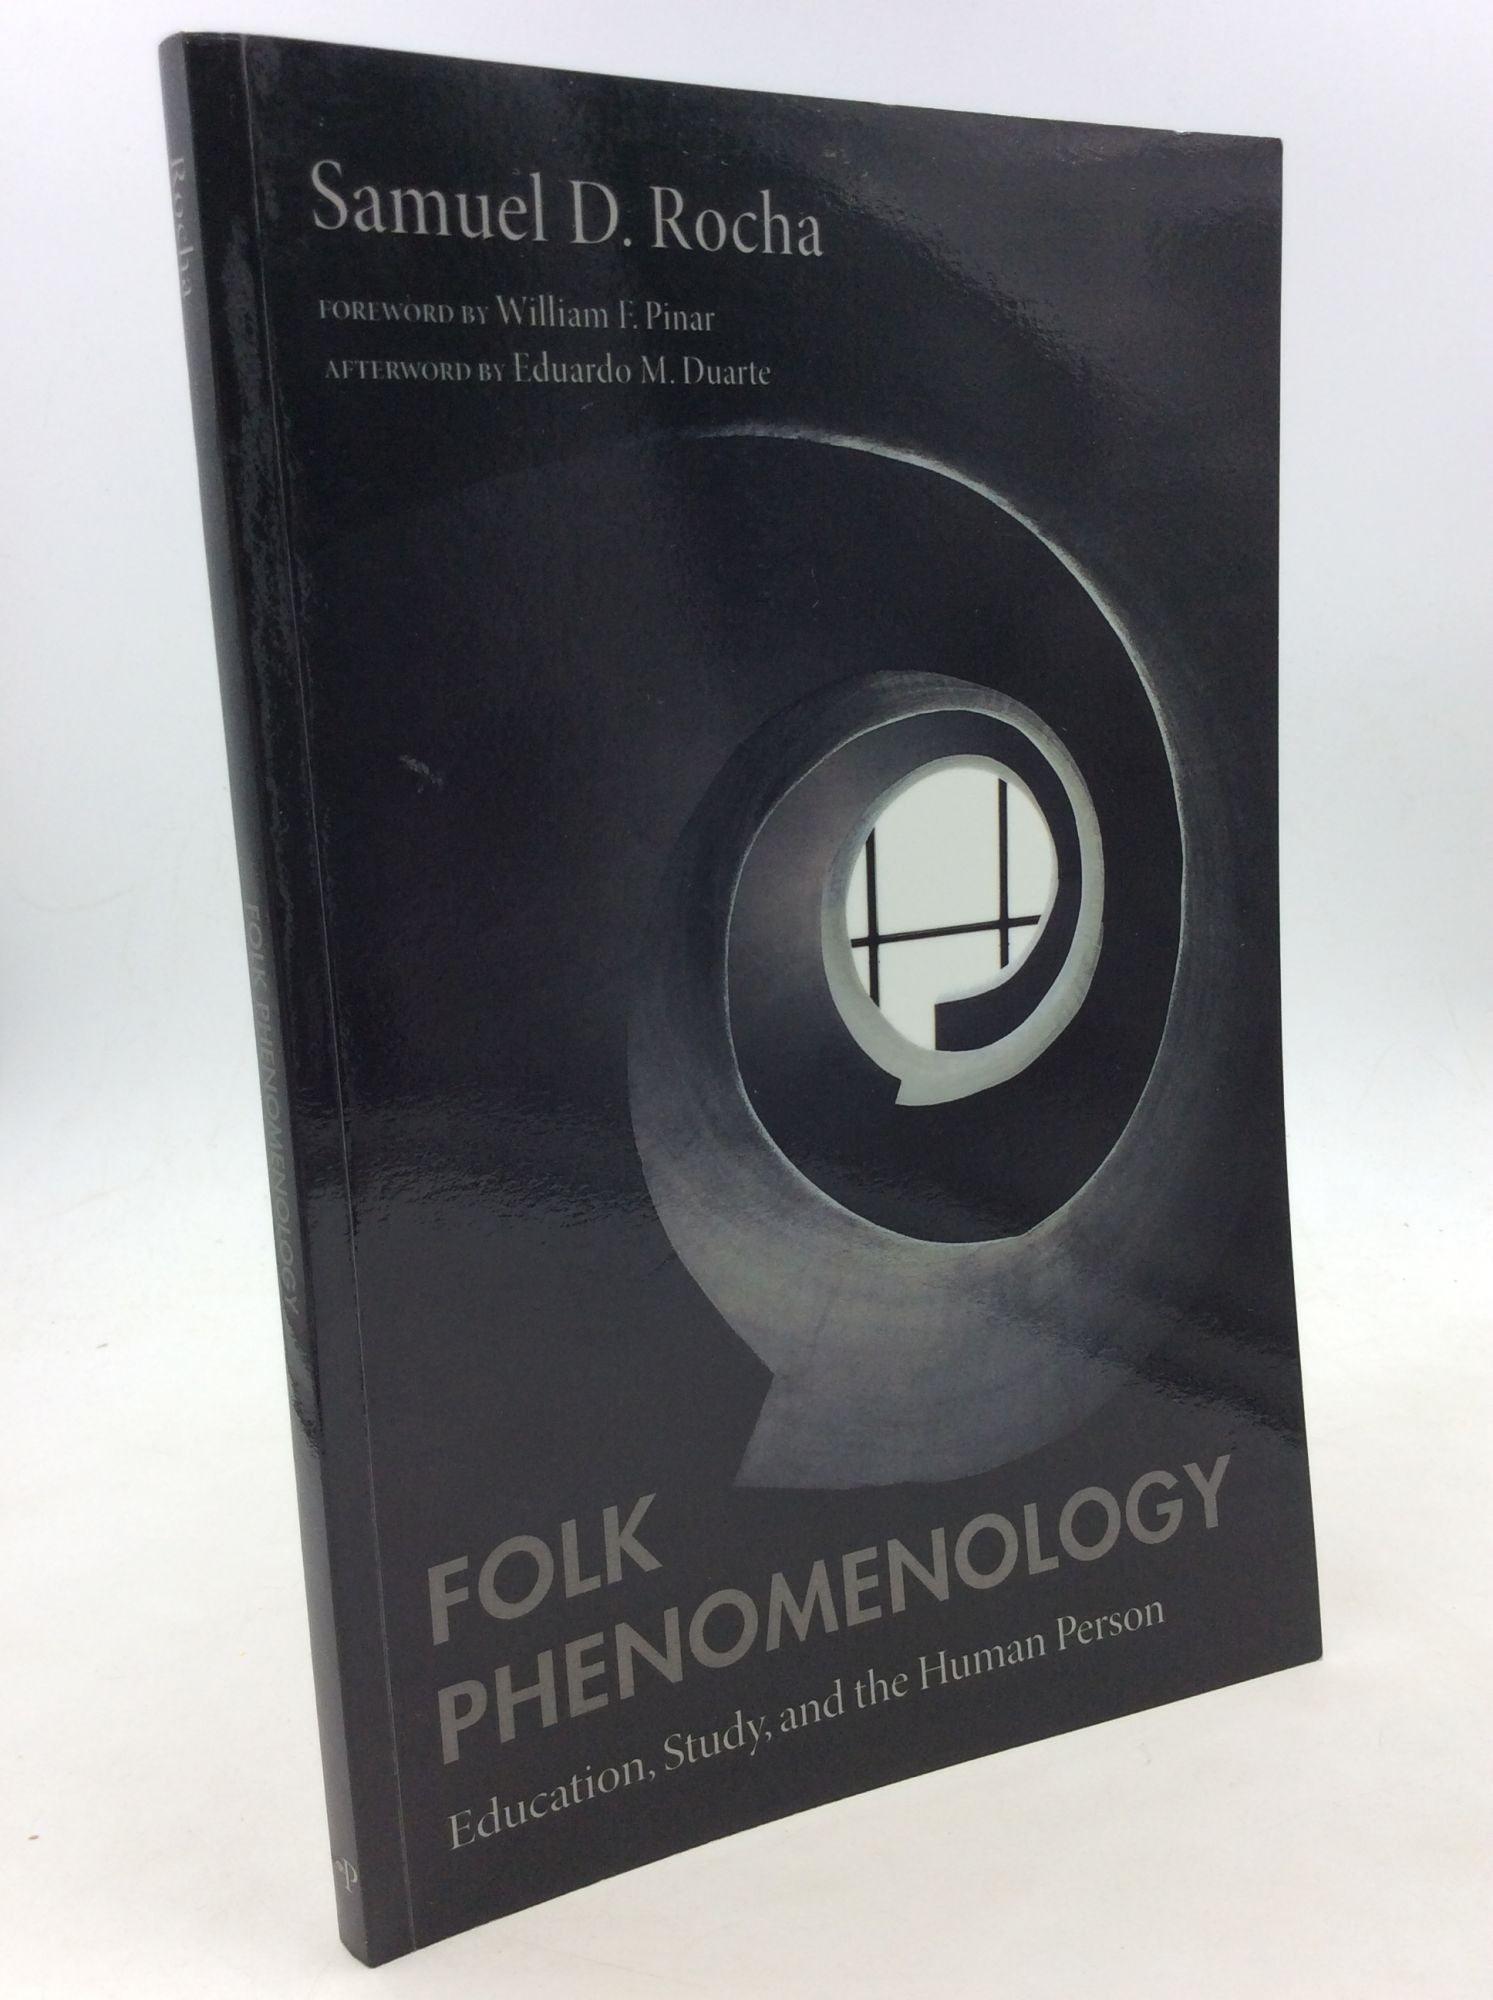 Samuel D. Rocha - Folk Phenomenology: Education, Study, and the Human Person